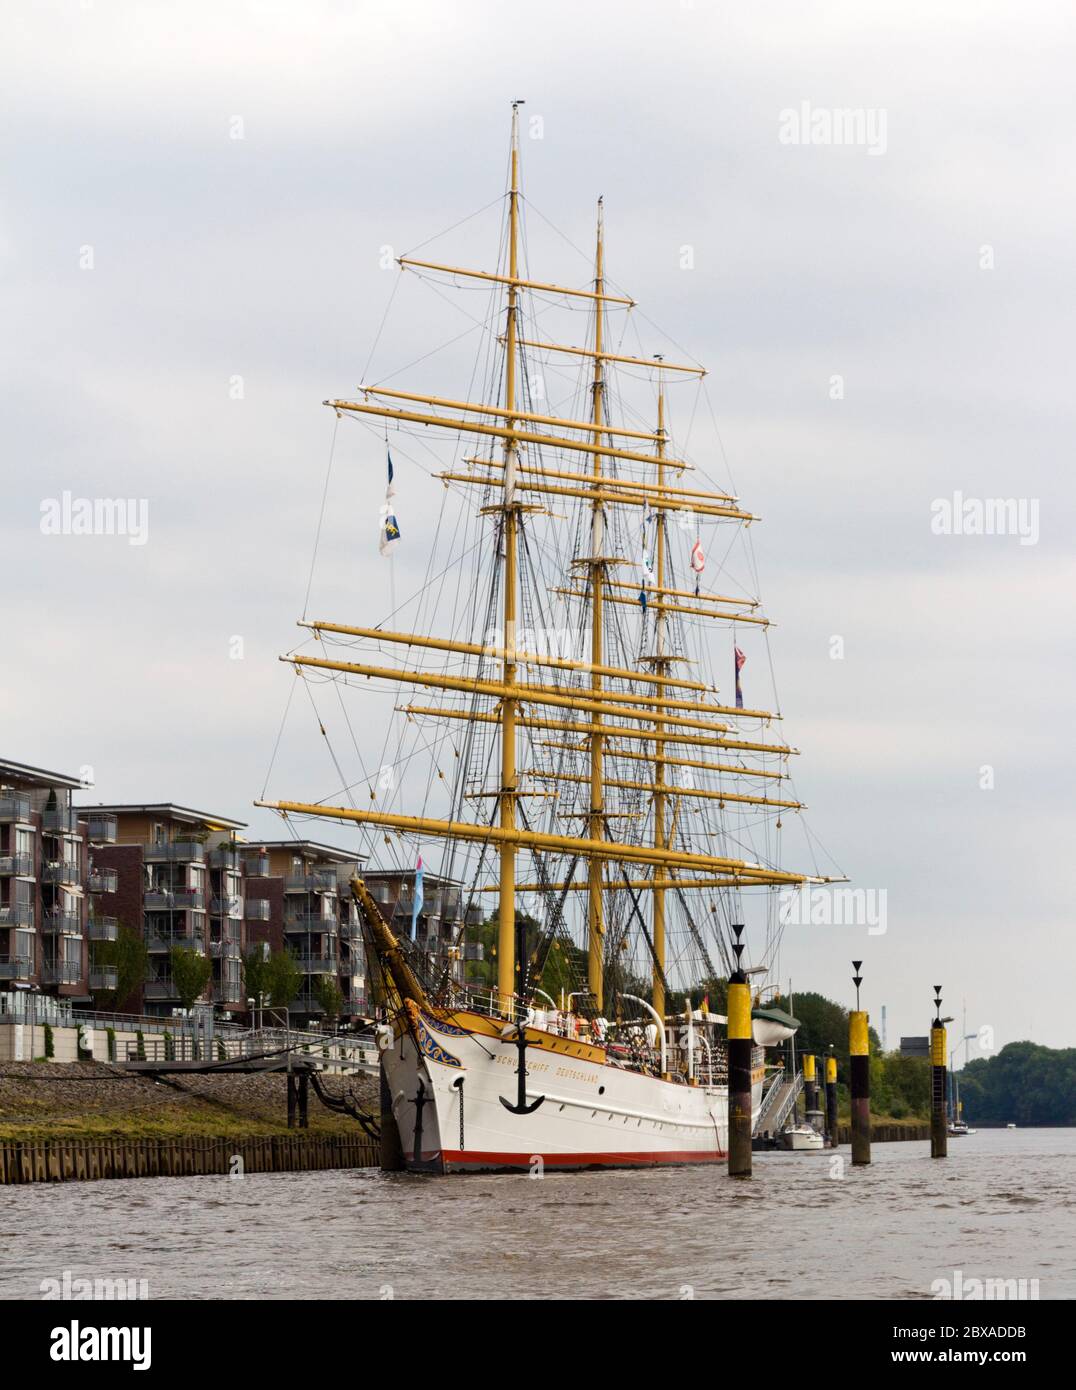 Sailing school ship 'Deutschland', Weser River, Bremen, Germany Stock Photo